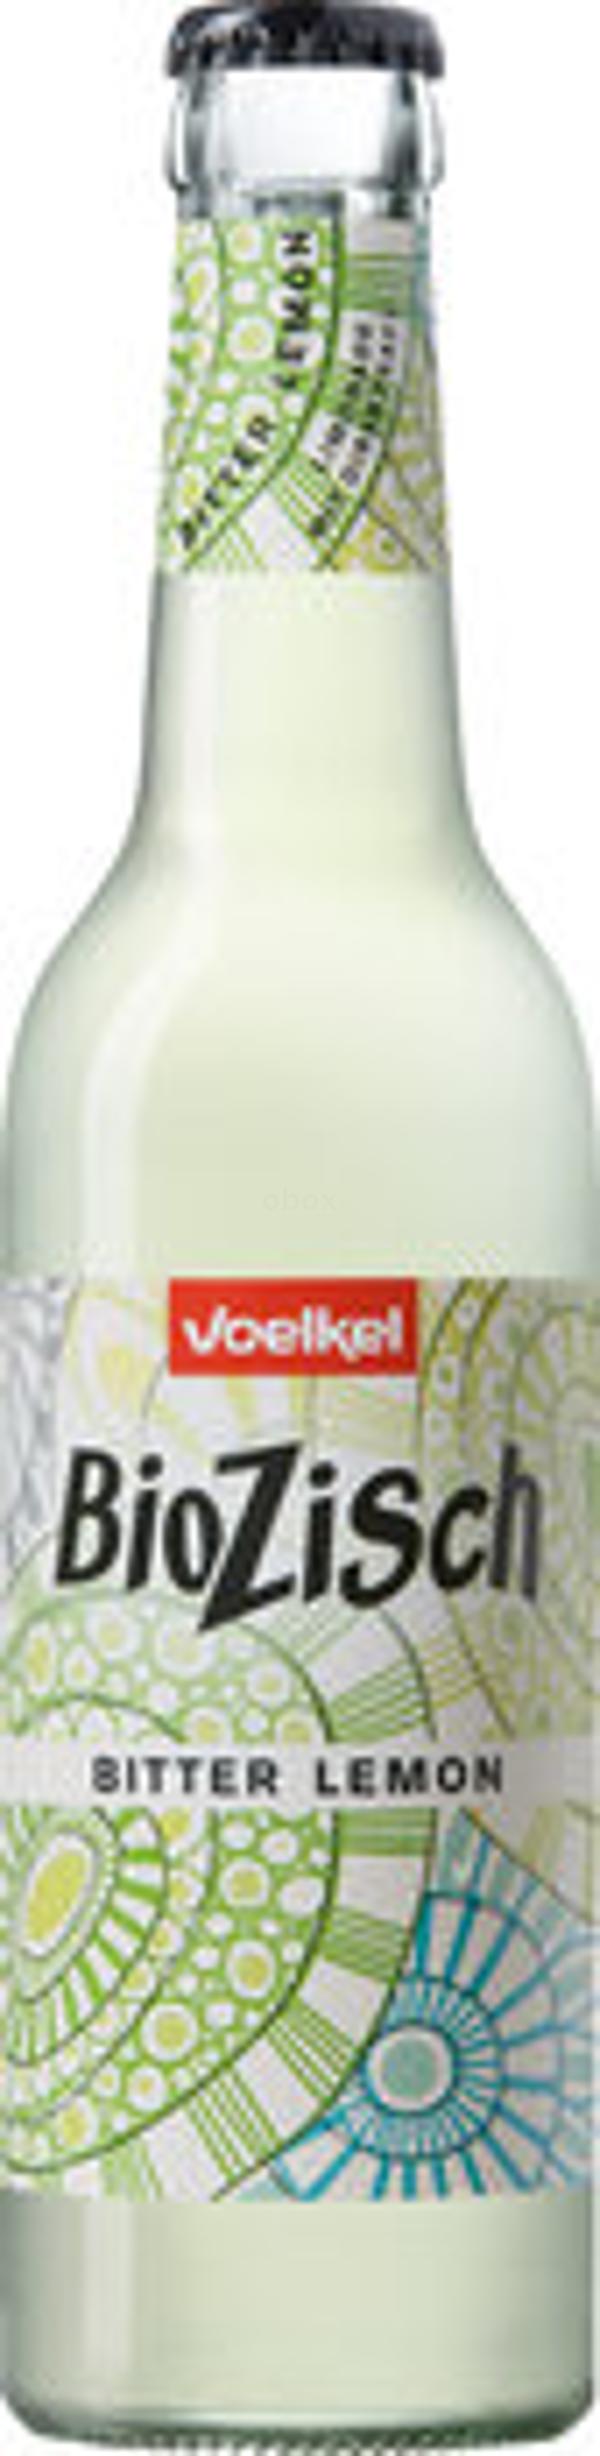 Produktfoto zu BioZisch Bitter-Lemon, 0,33l